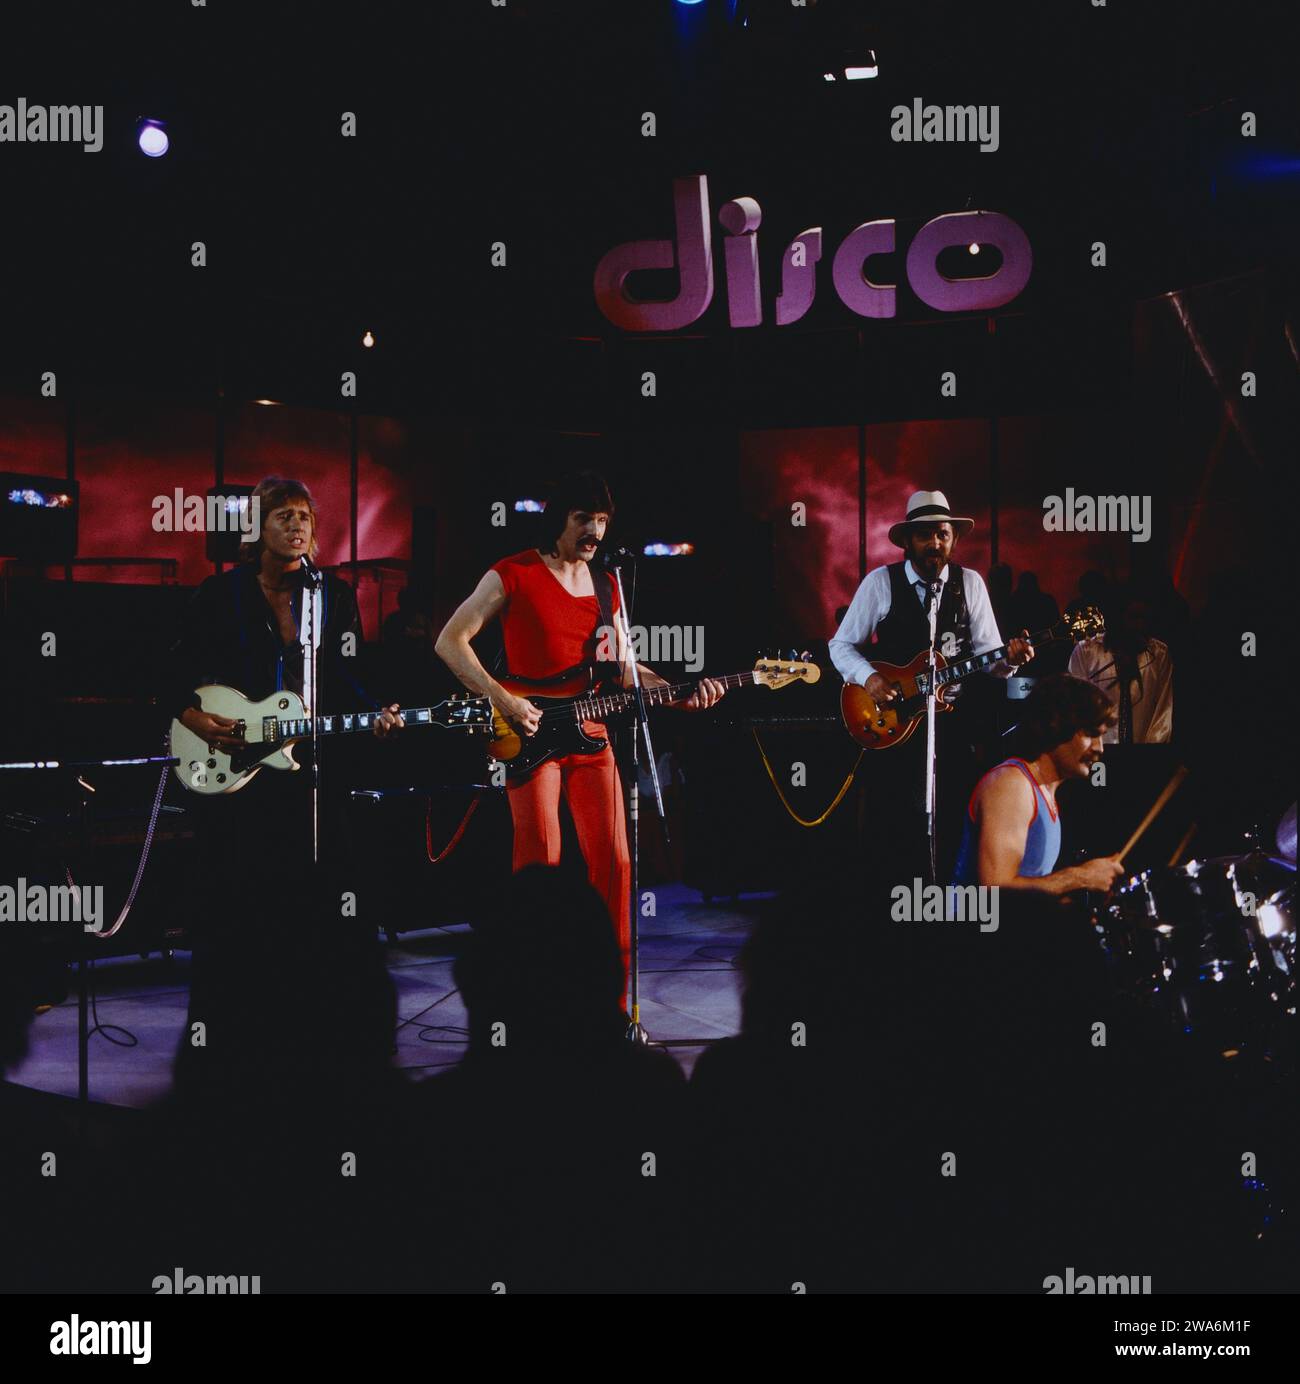 Disco, ZDF Musiksendung, 1979, Auftritt der amerikanischen Pop Rock Band Exile. Disco, TV Music show, 1979, esibizione della band pop rock americana Exile. Foto Stock